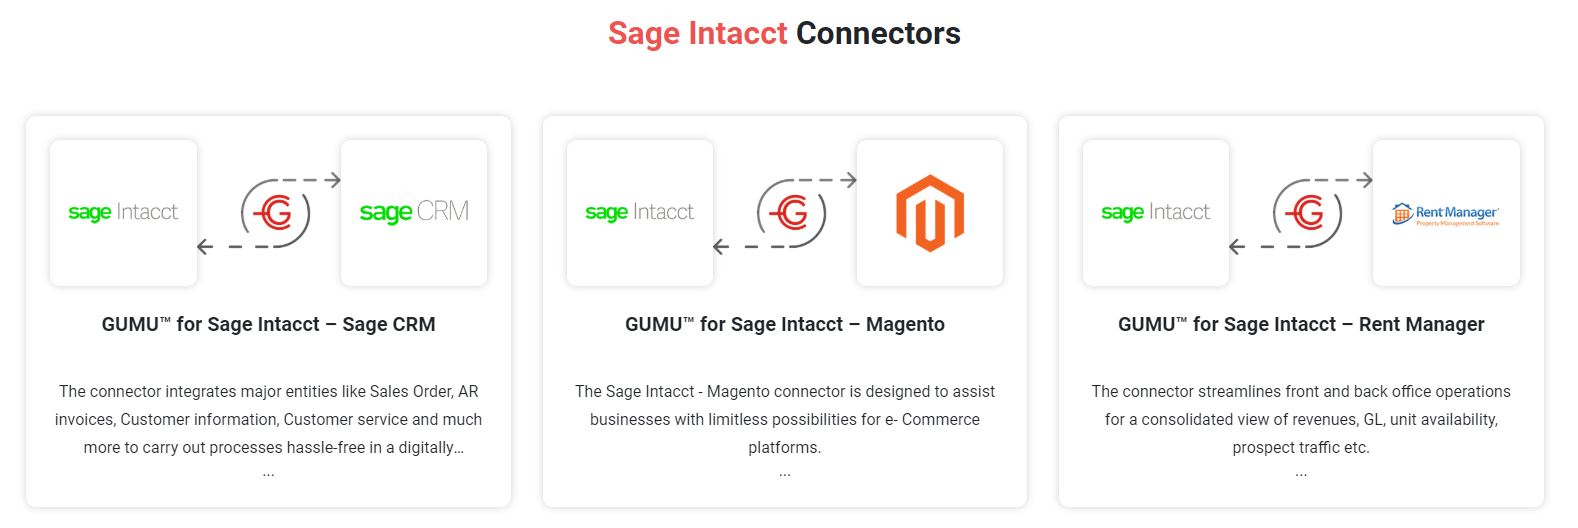 ERP Sage Intacct Connector